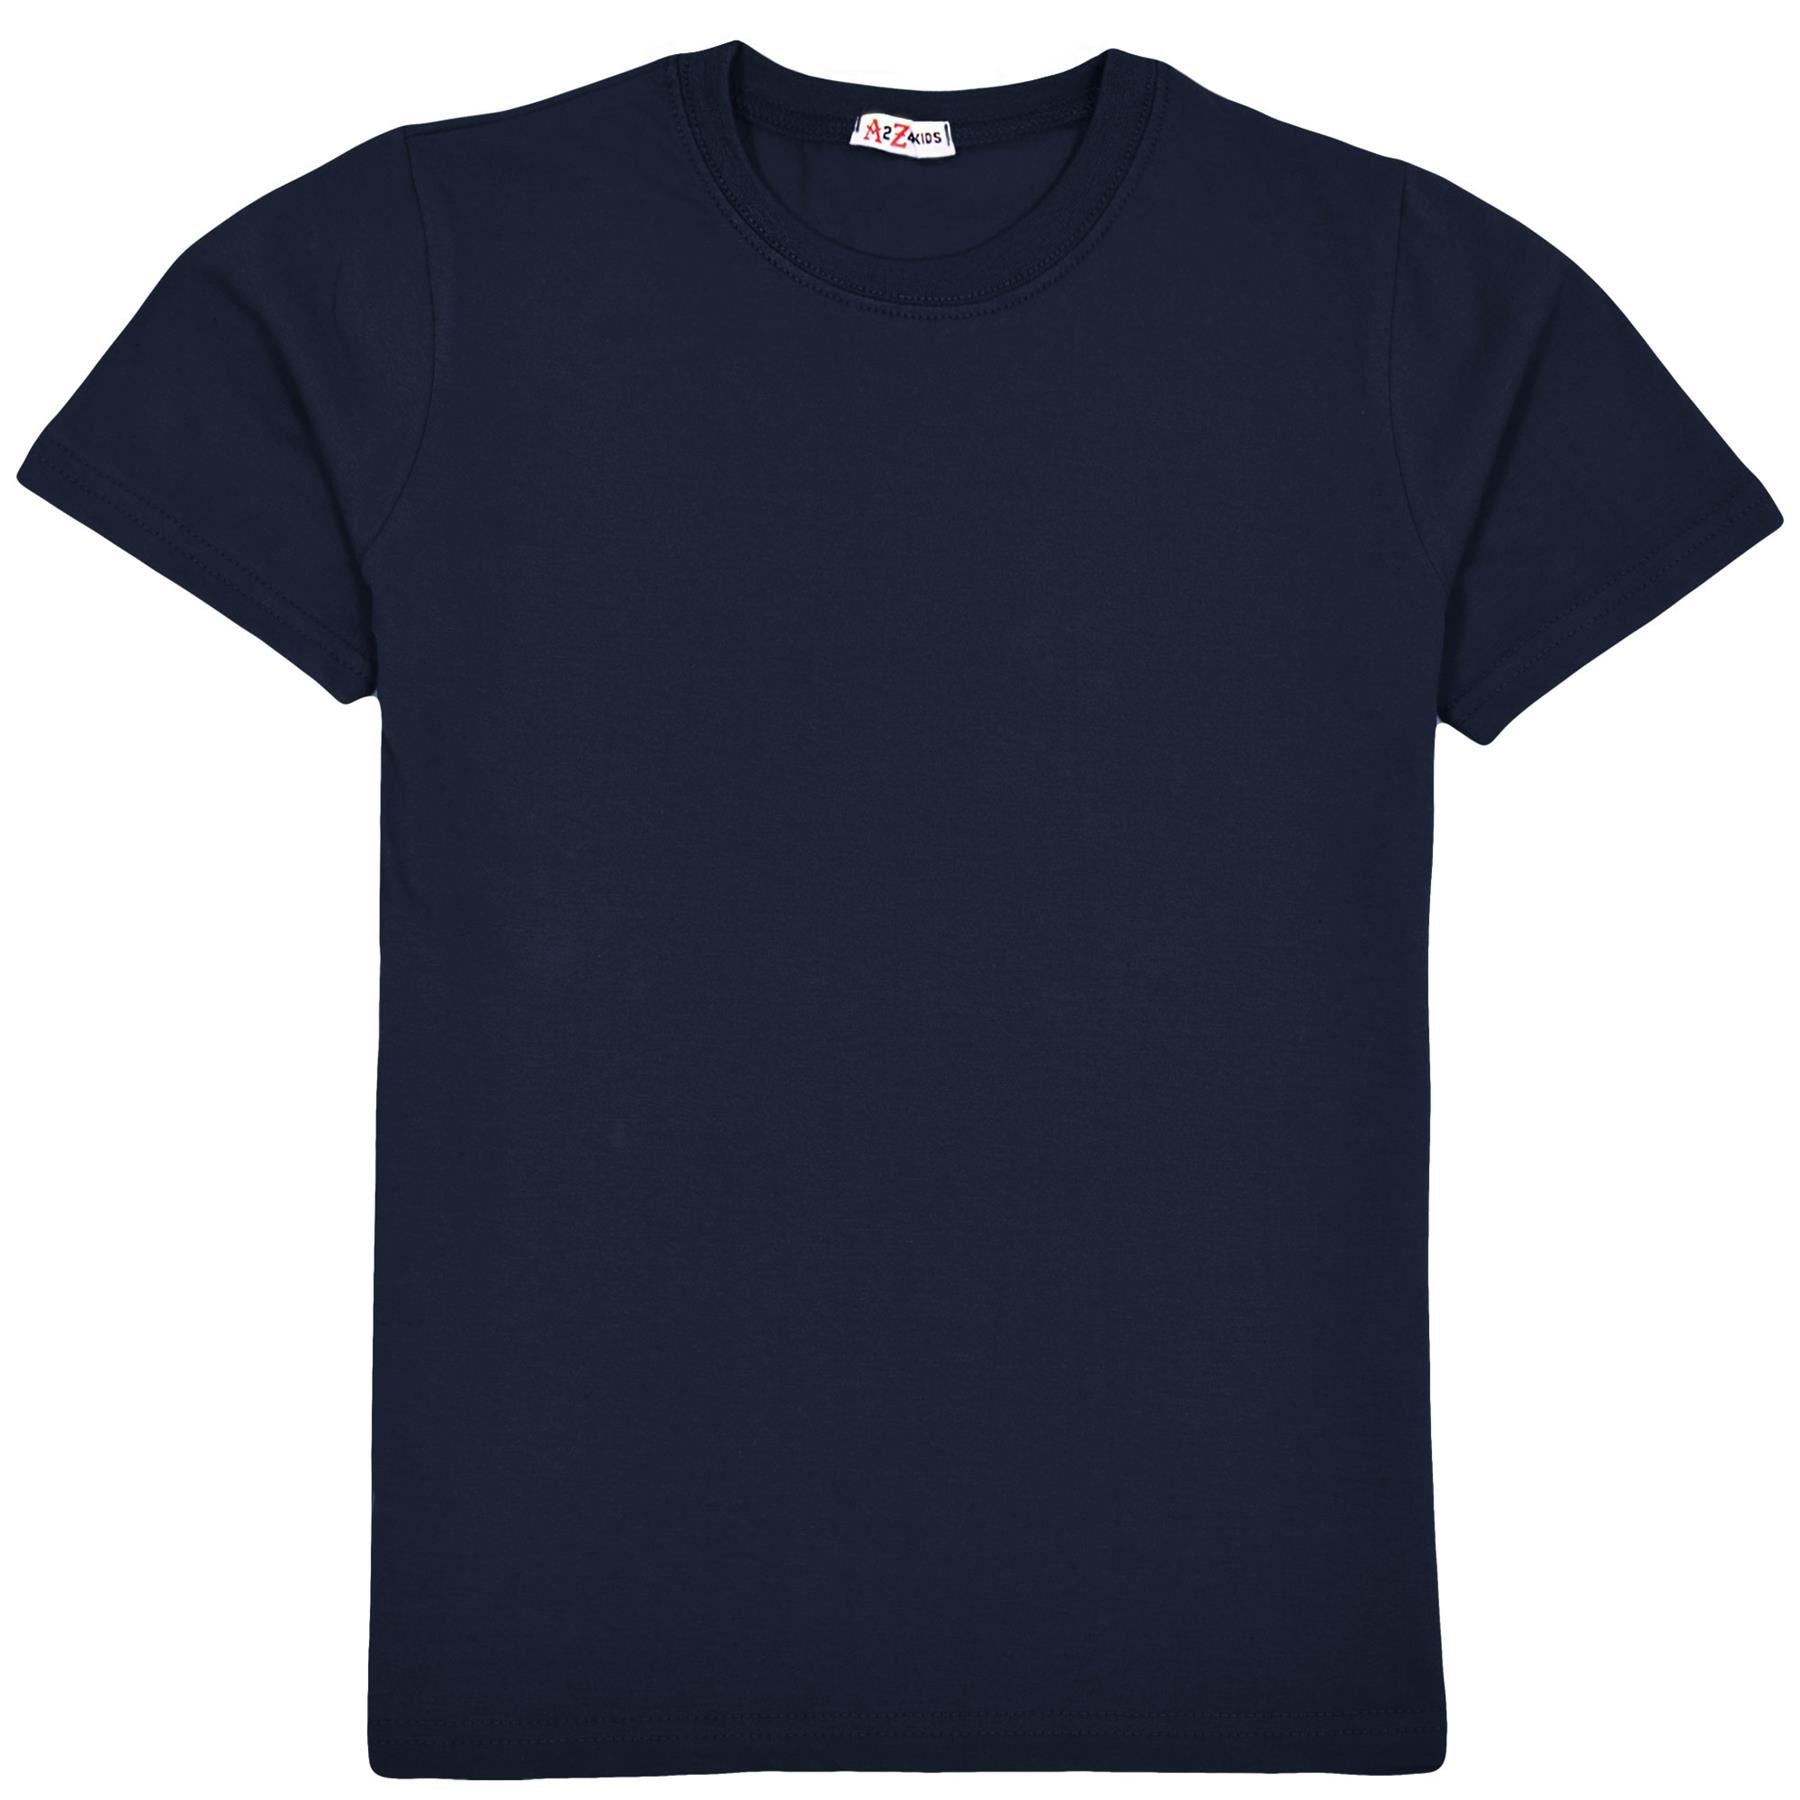 Boys Plain Soft Feel Summer Navy T Shirt Top